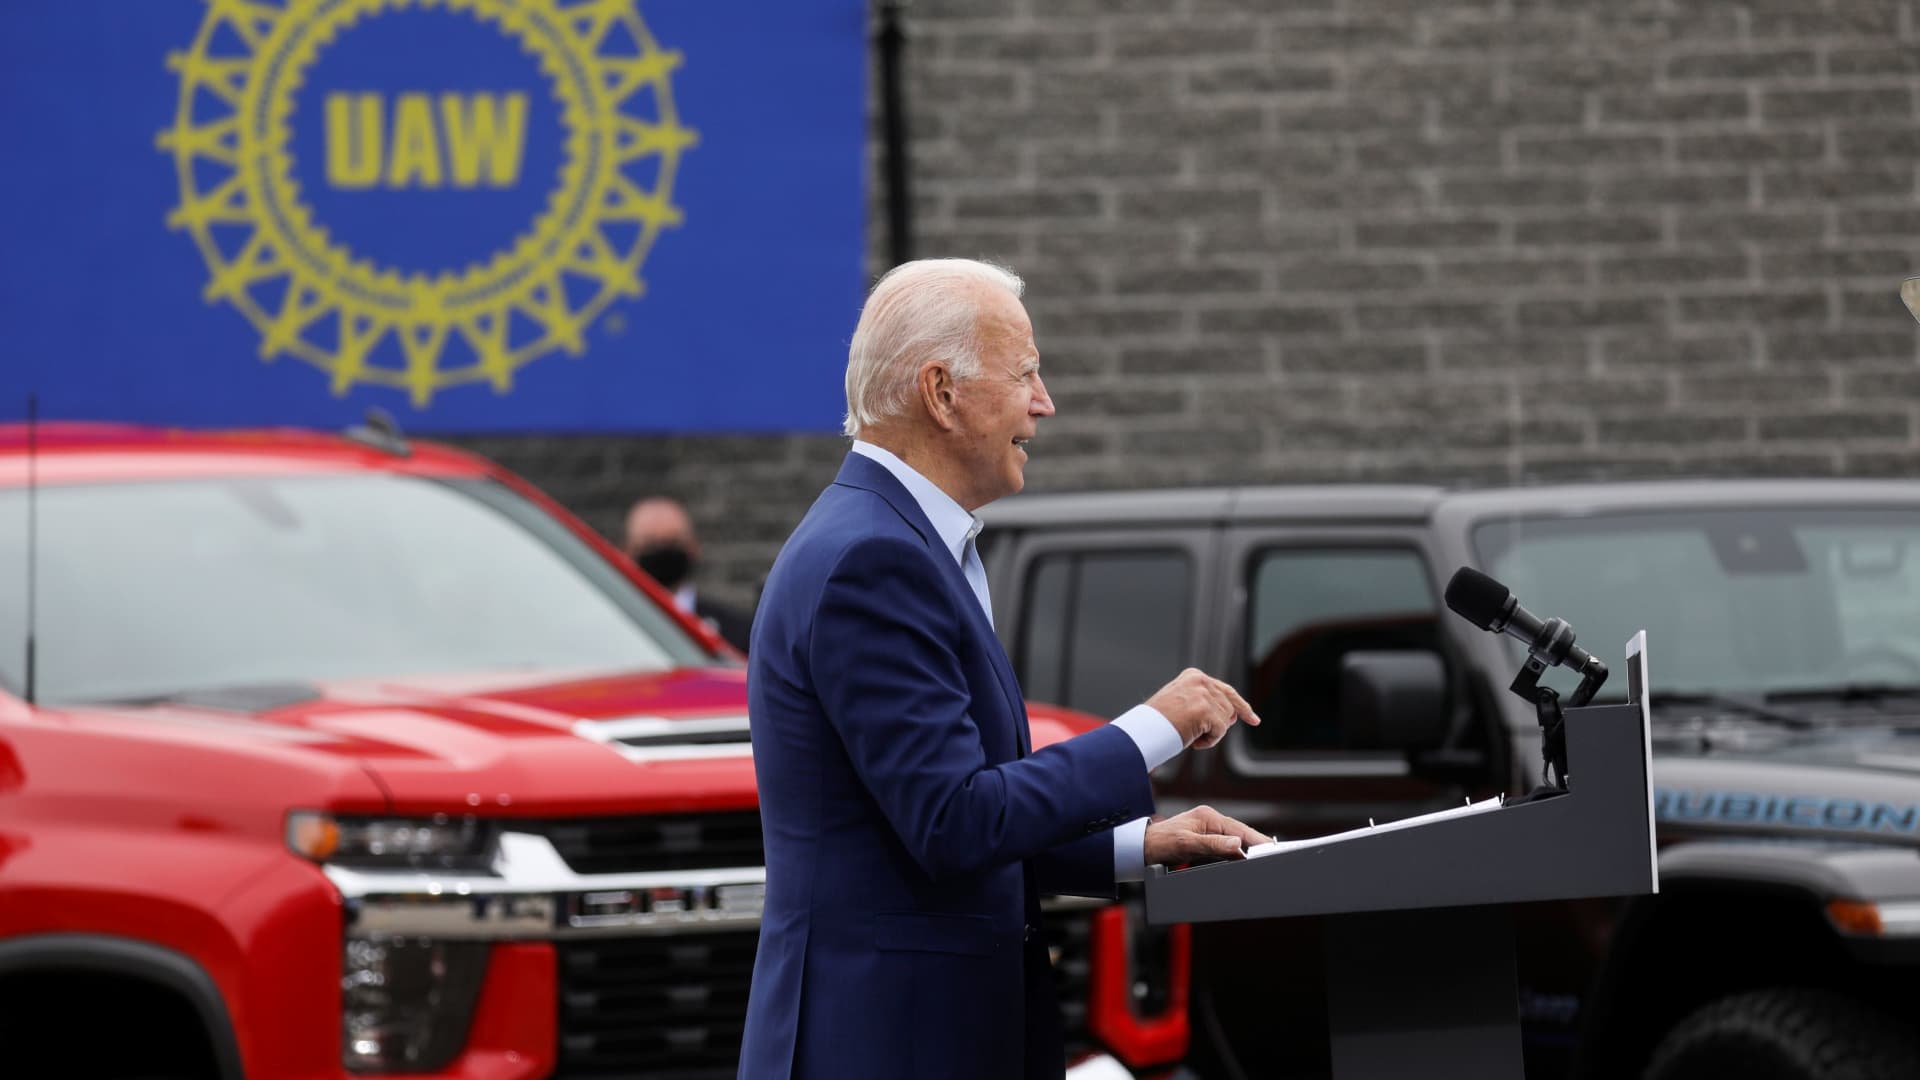 Biden urges ‘fair agreement’ between UAW and Detroit automakers that avoids plant closures Auto Recent